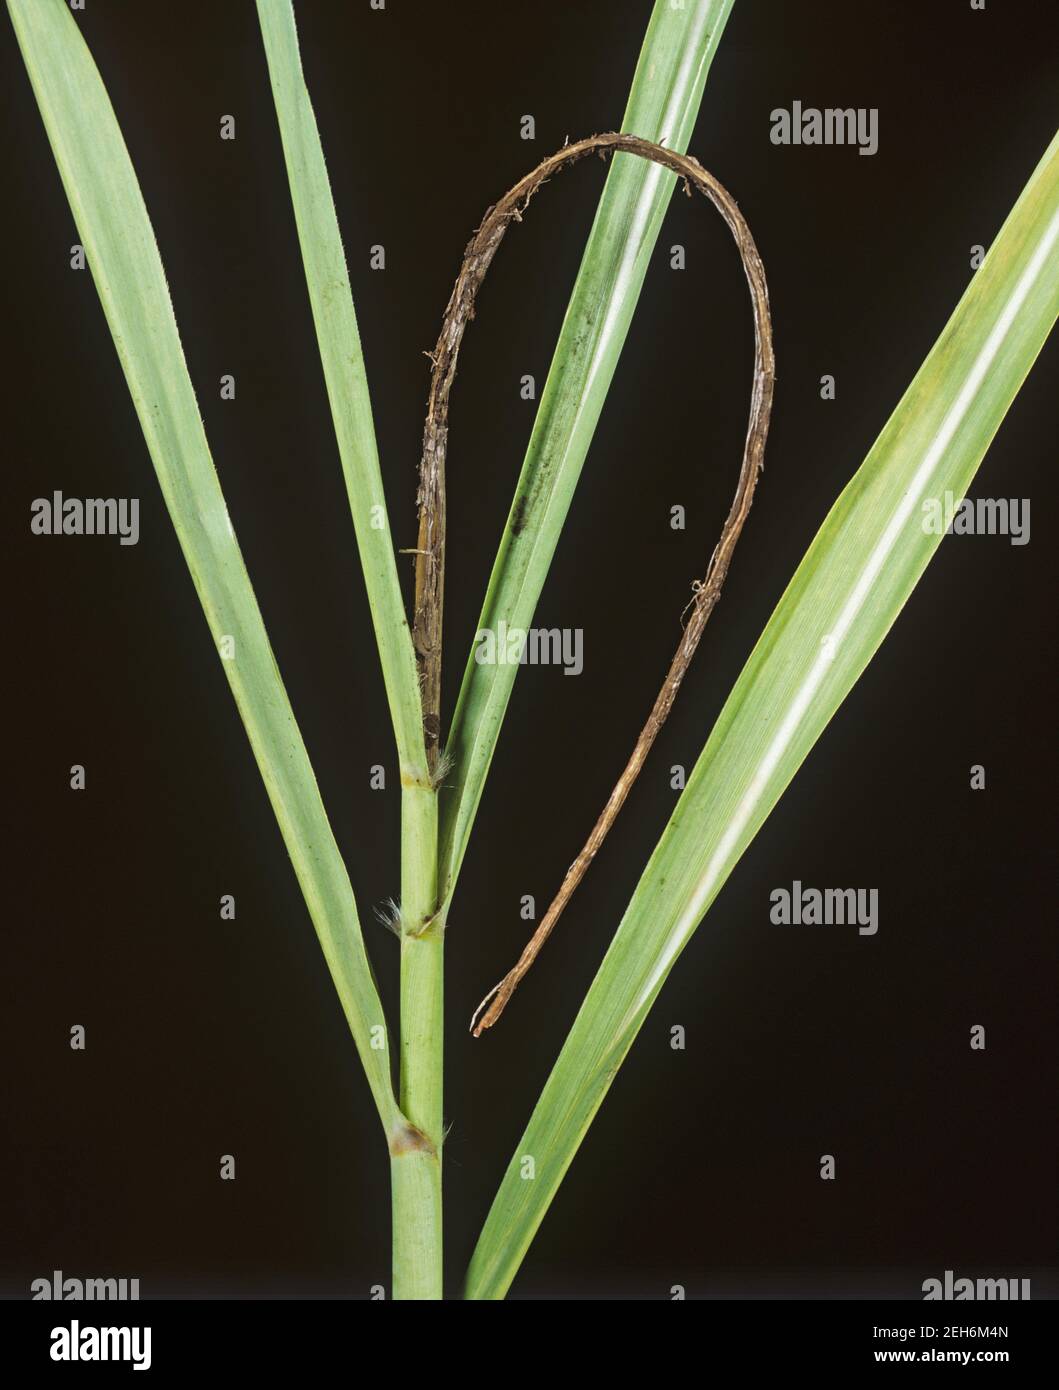 Sugarcane smut (Sporisorium scitamineum) 'smut-whip' tassel or culmicolous outgrowth on a sugar cane plant, Thailand Stock Photo